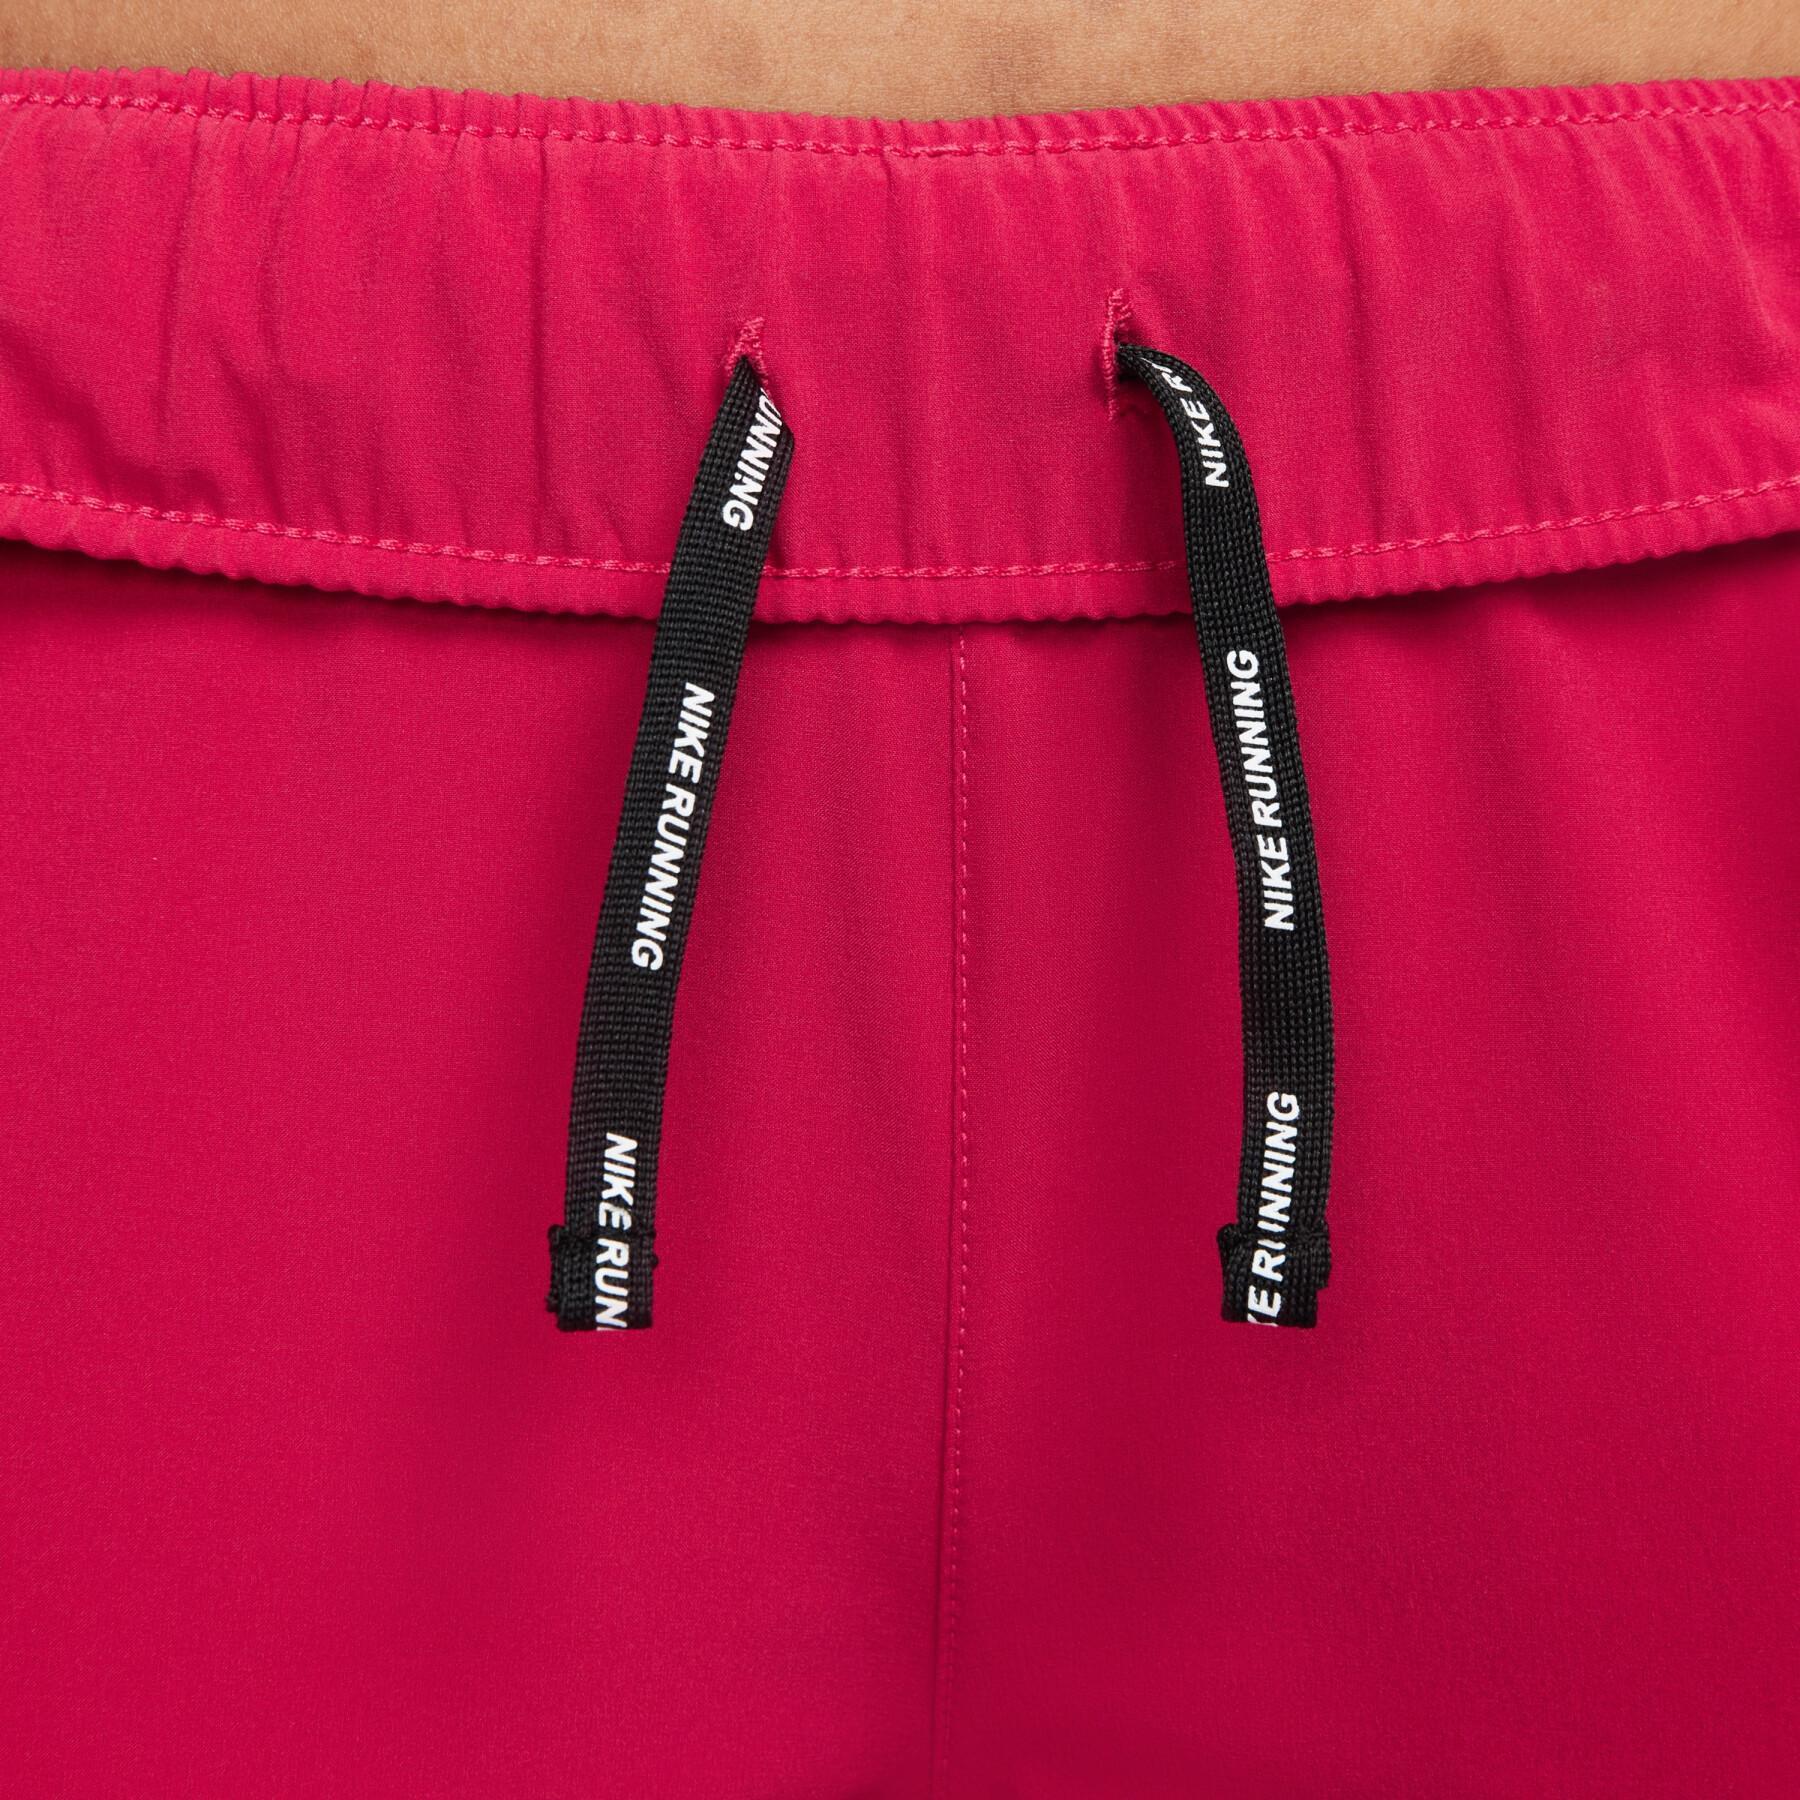 Women's jogging suit Nike Dri-FIT Essential